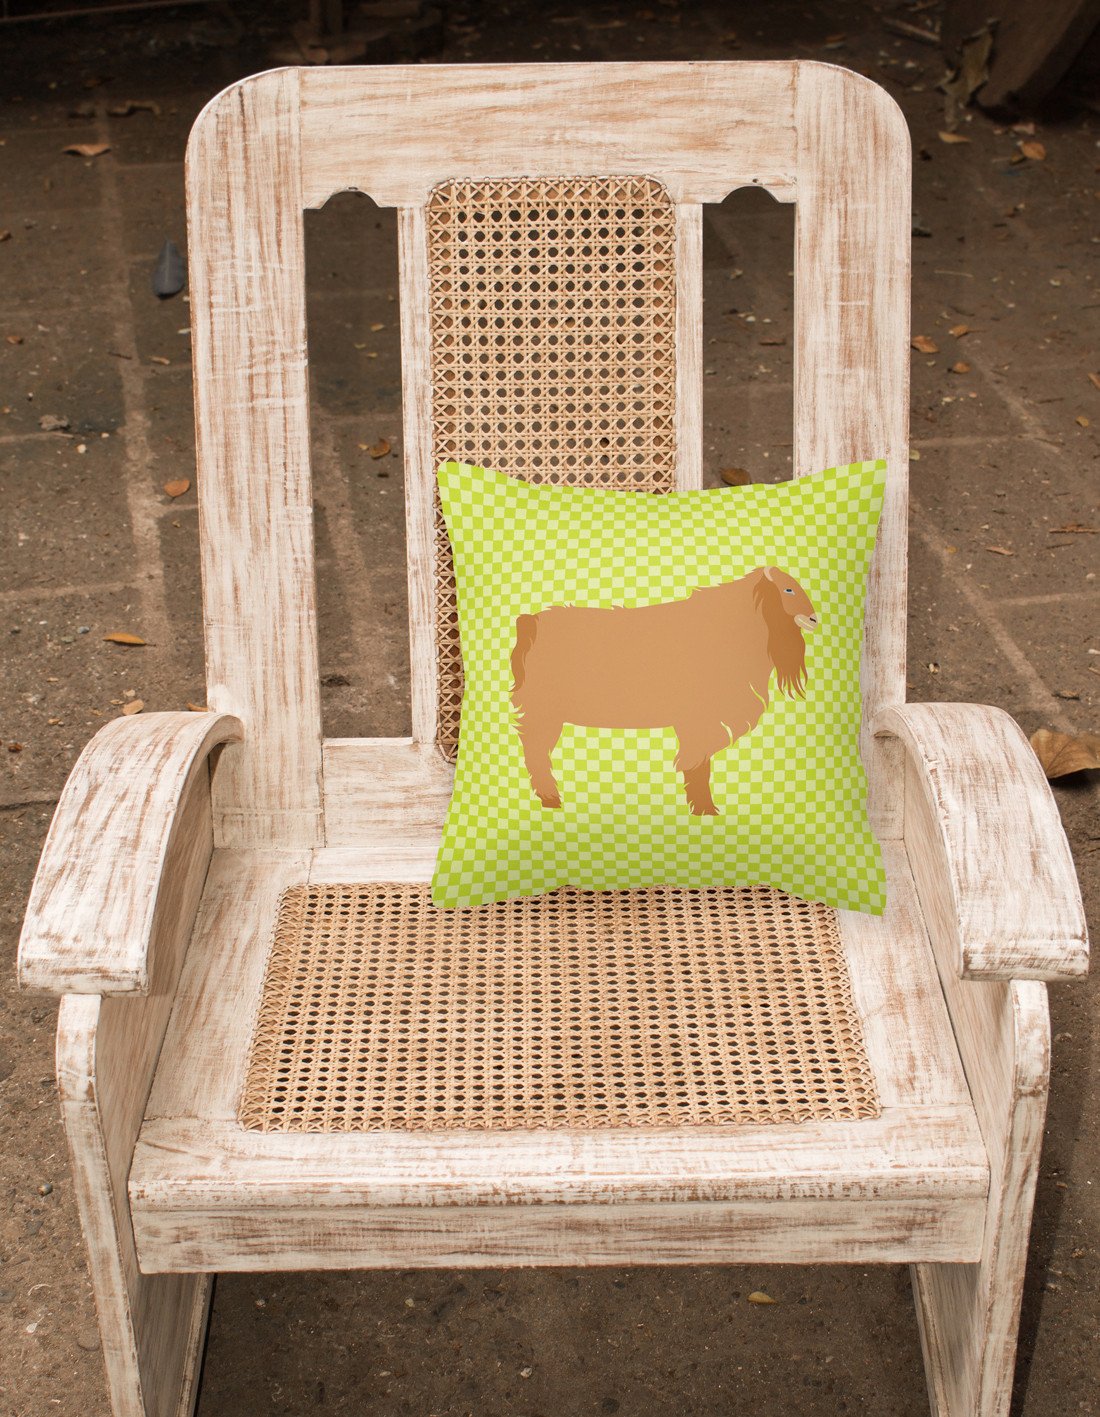 American Lamancha Goat Green Fabric Decorative Pillow BB7711PW1818 by Caroline's Treasures